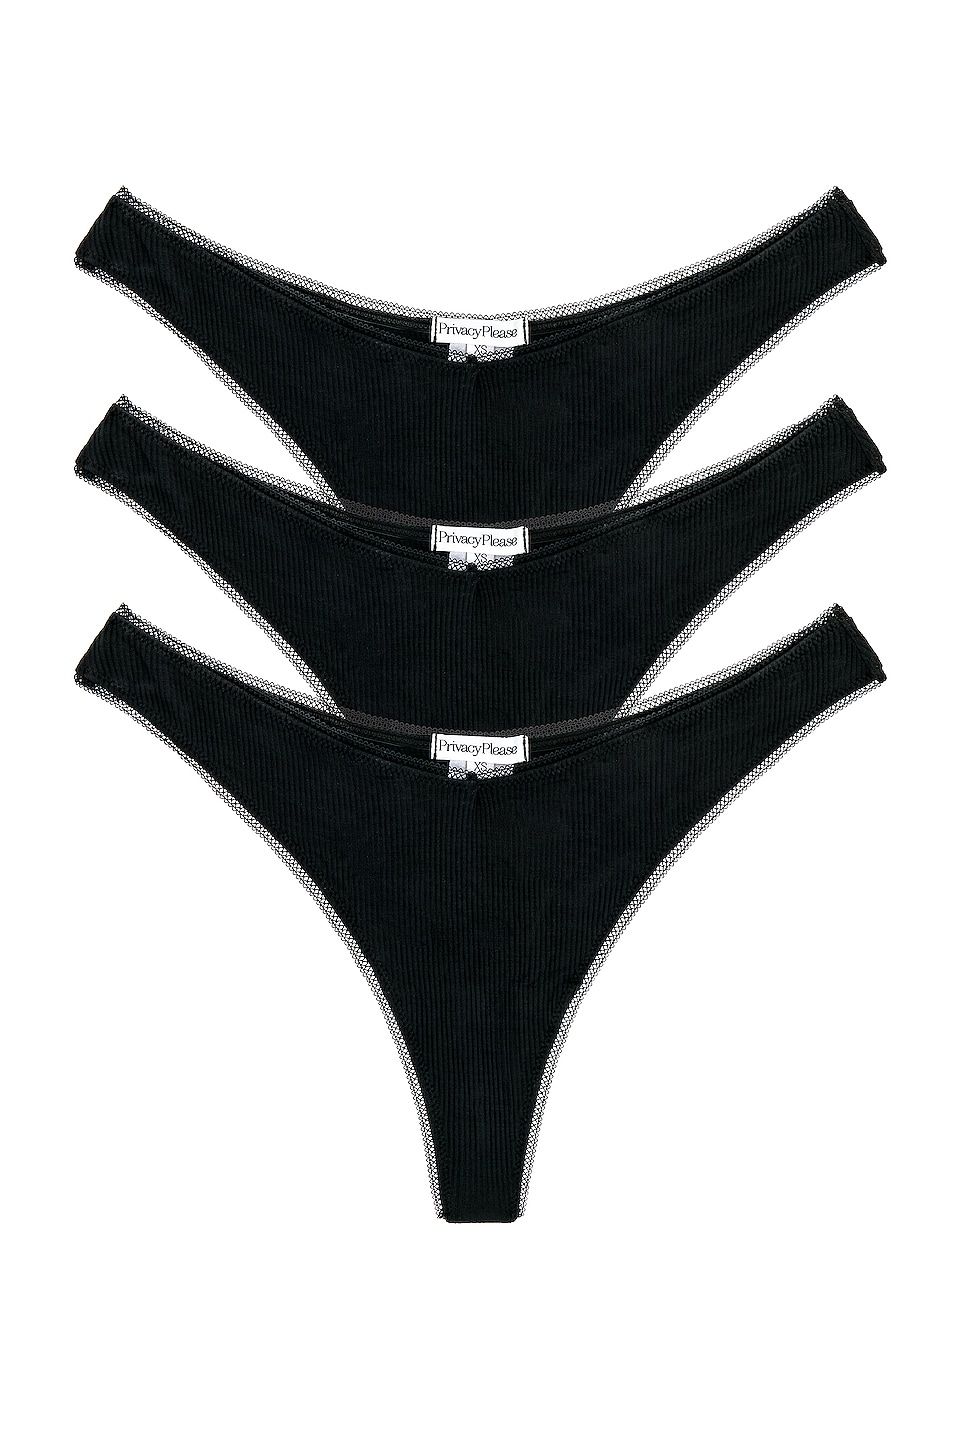 Sabrina Thong in Black. Revolve Women Clothing Underwear Briefs Thongs 